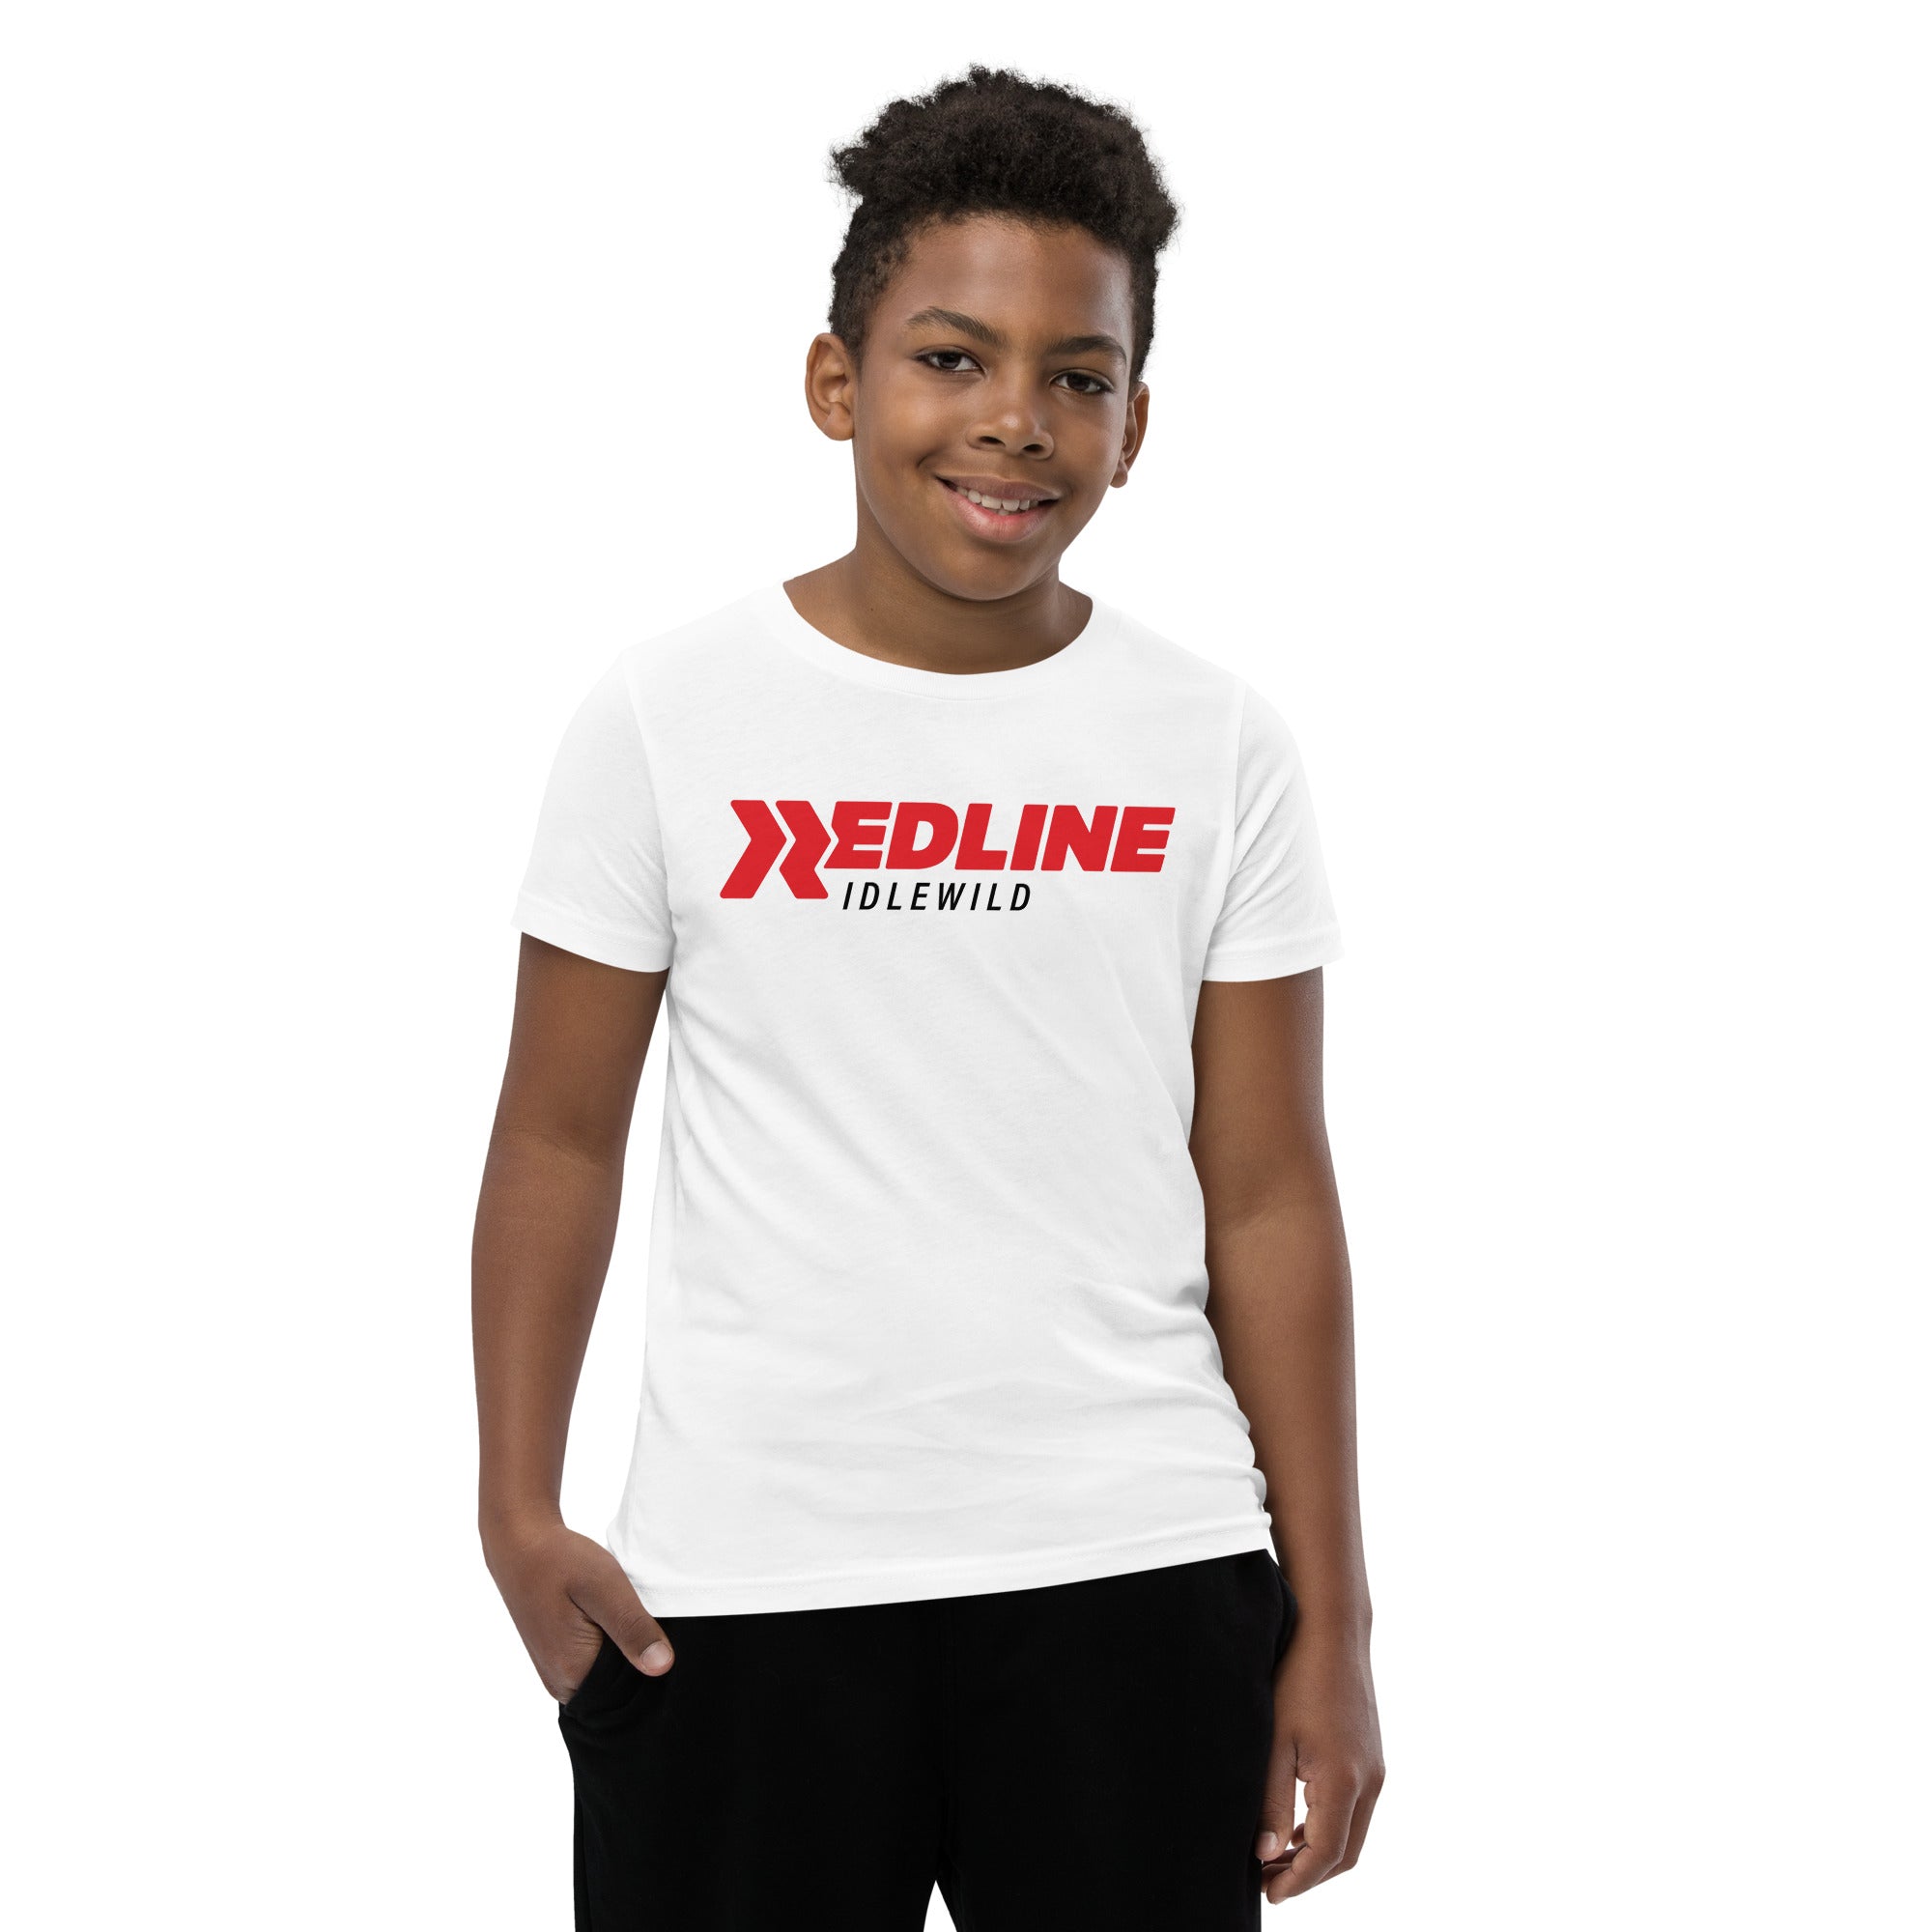 Idlewild Logo R/B - White Youth Short Sleeve T-Shirt